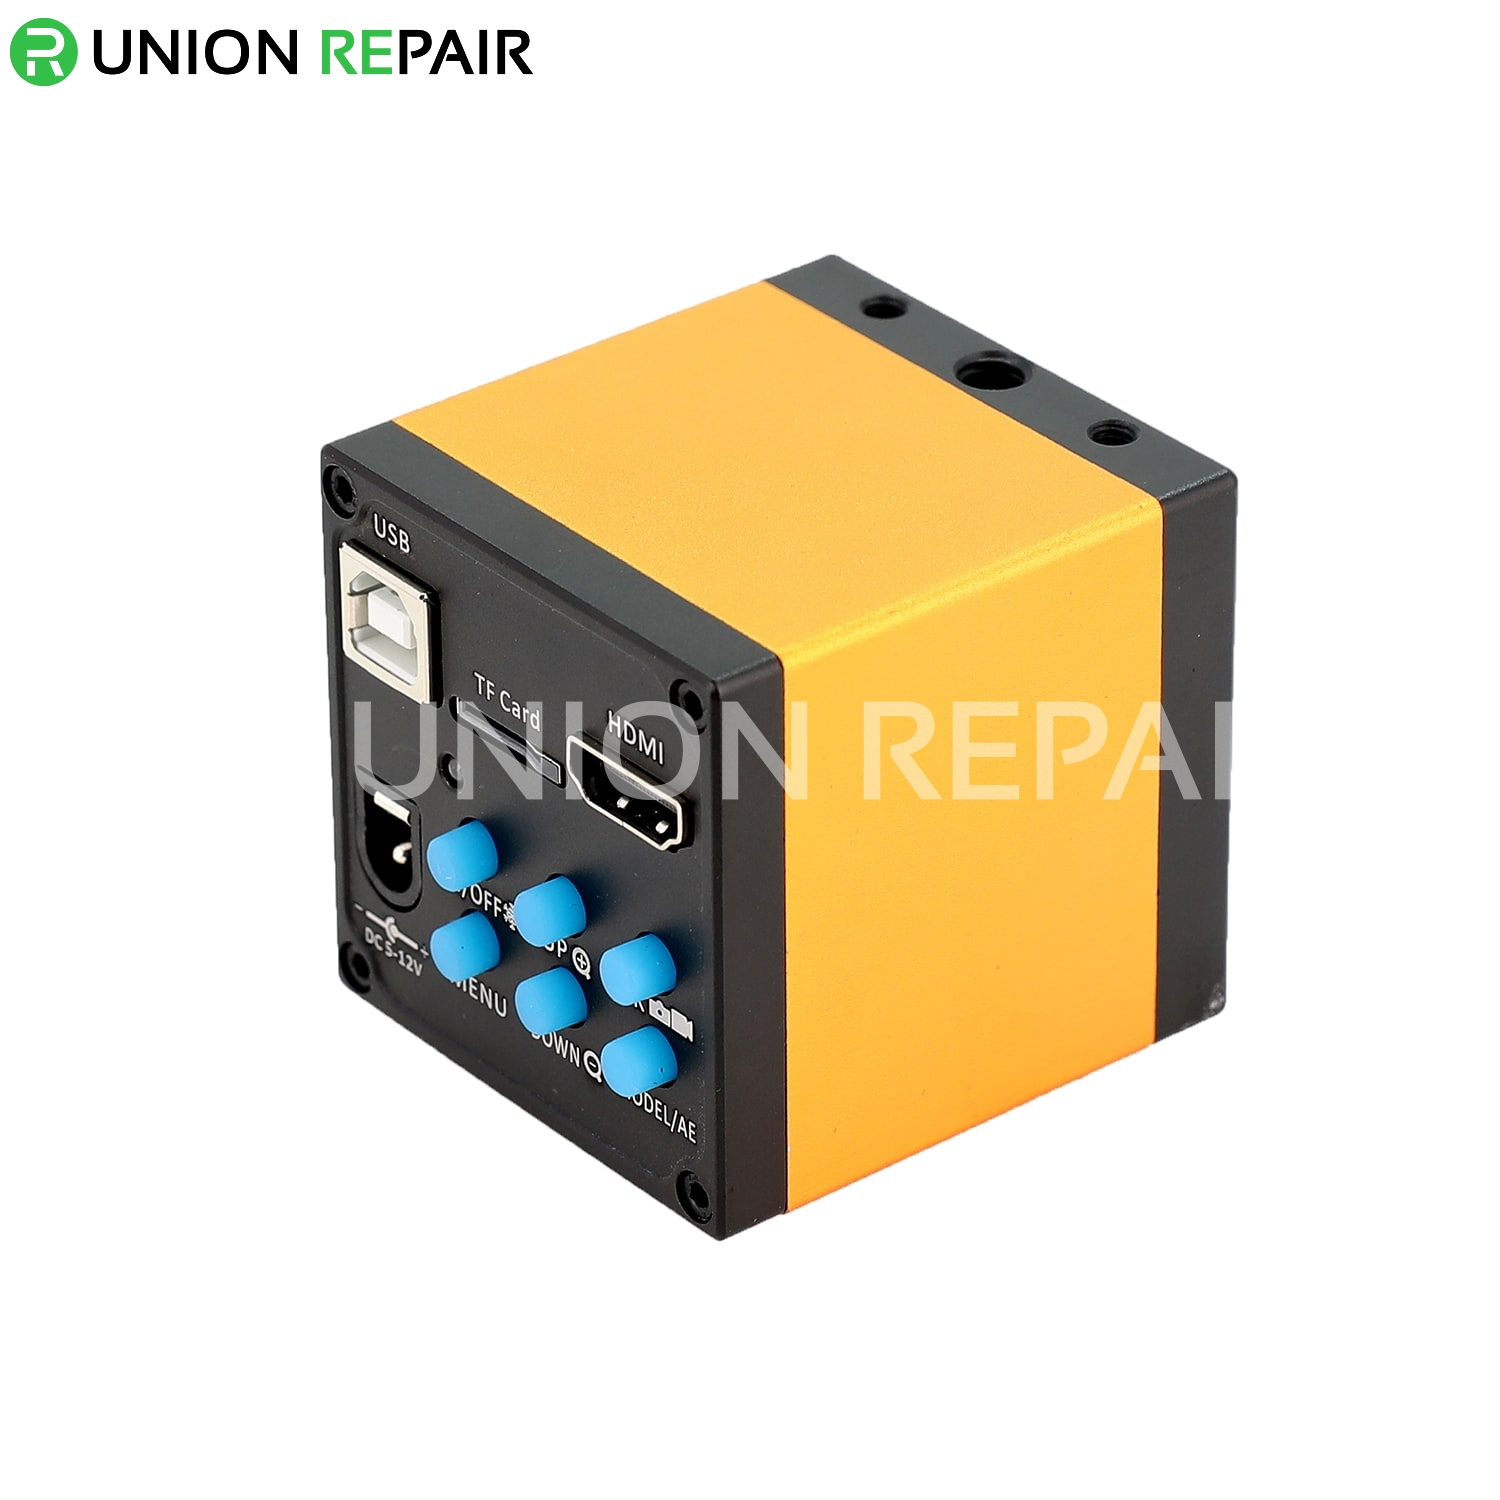 14MP 1080P HDMI USB Industrial Microscope Camera with Remote Control